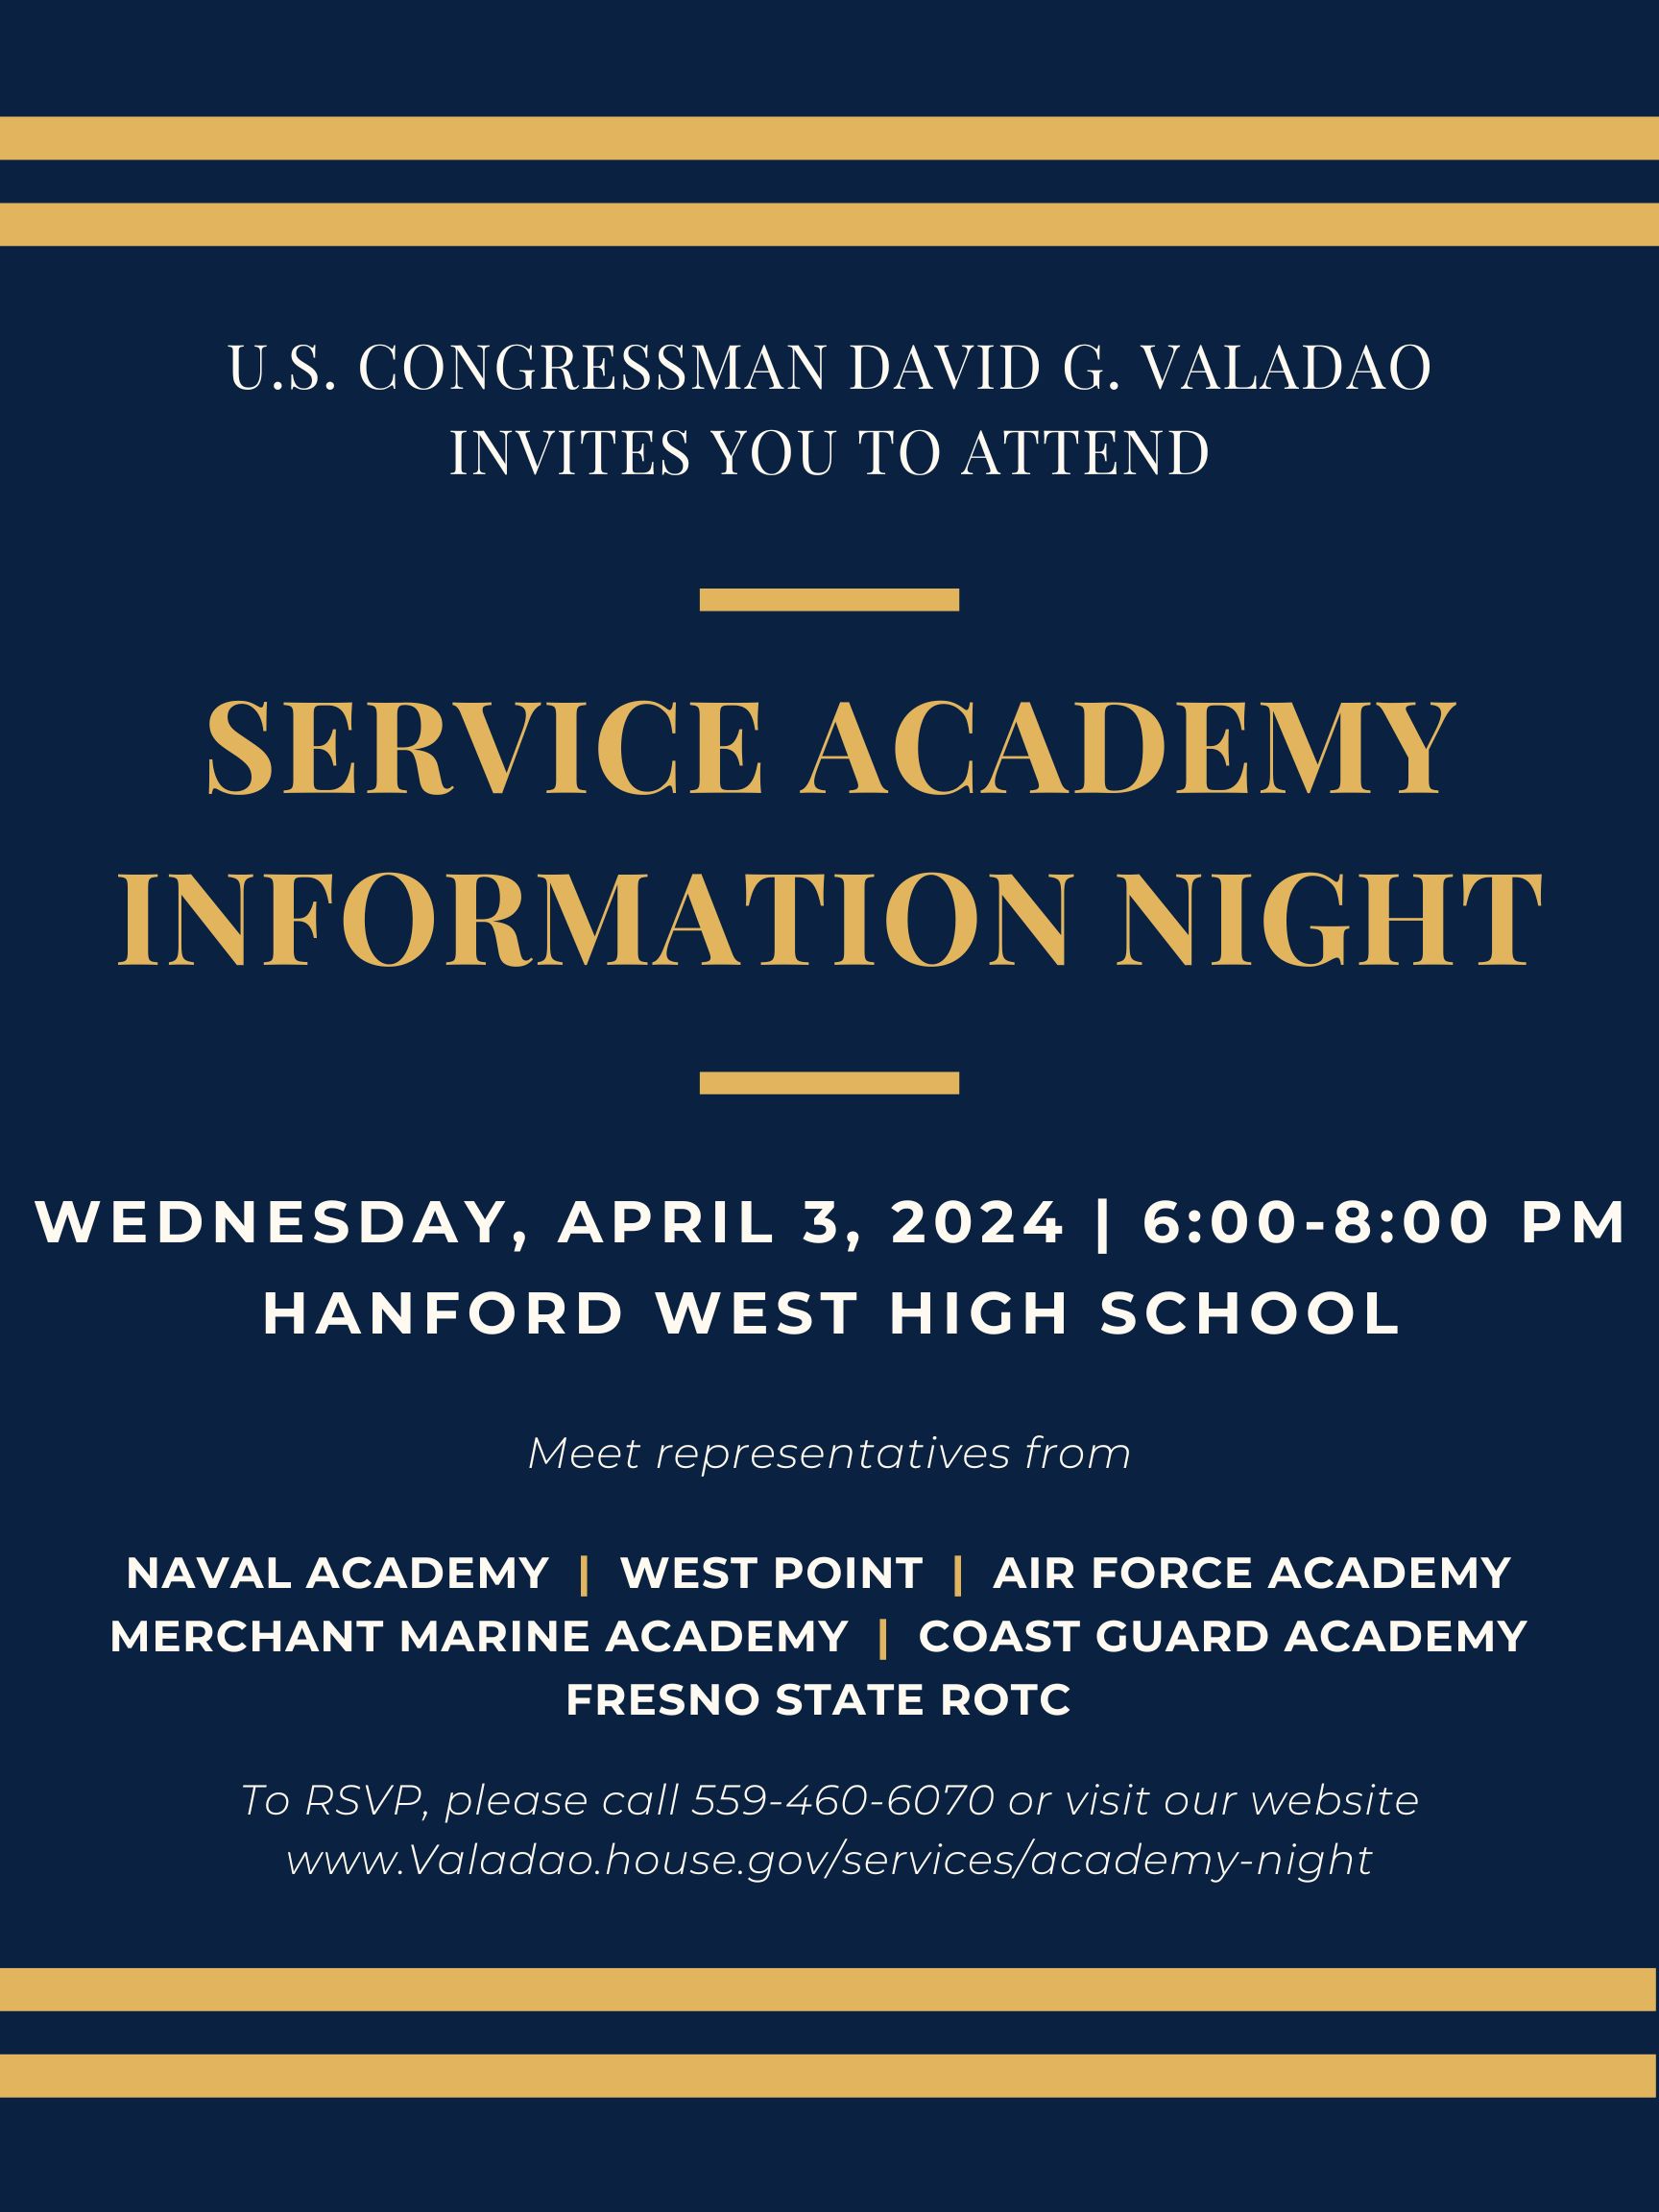 Service Academy Information Night - April 3rd, 2024